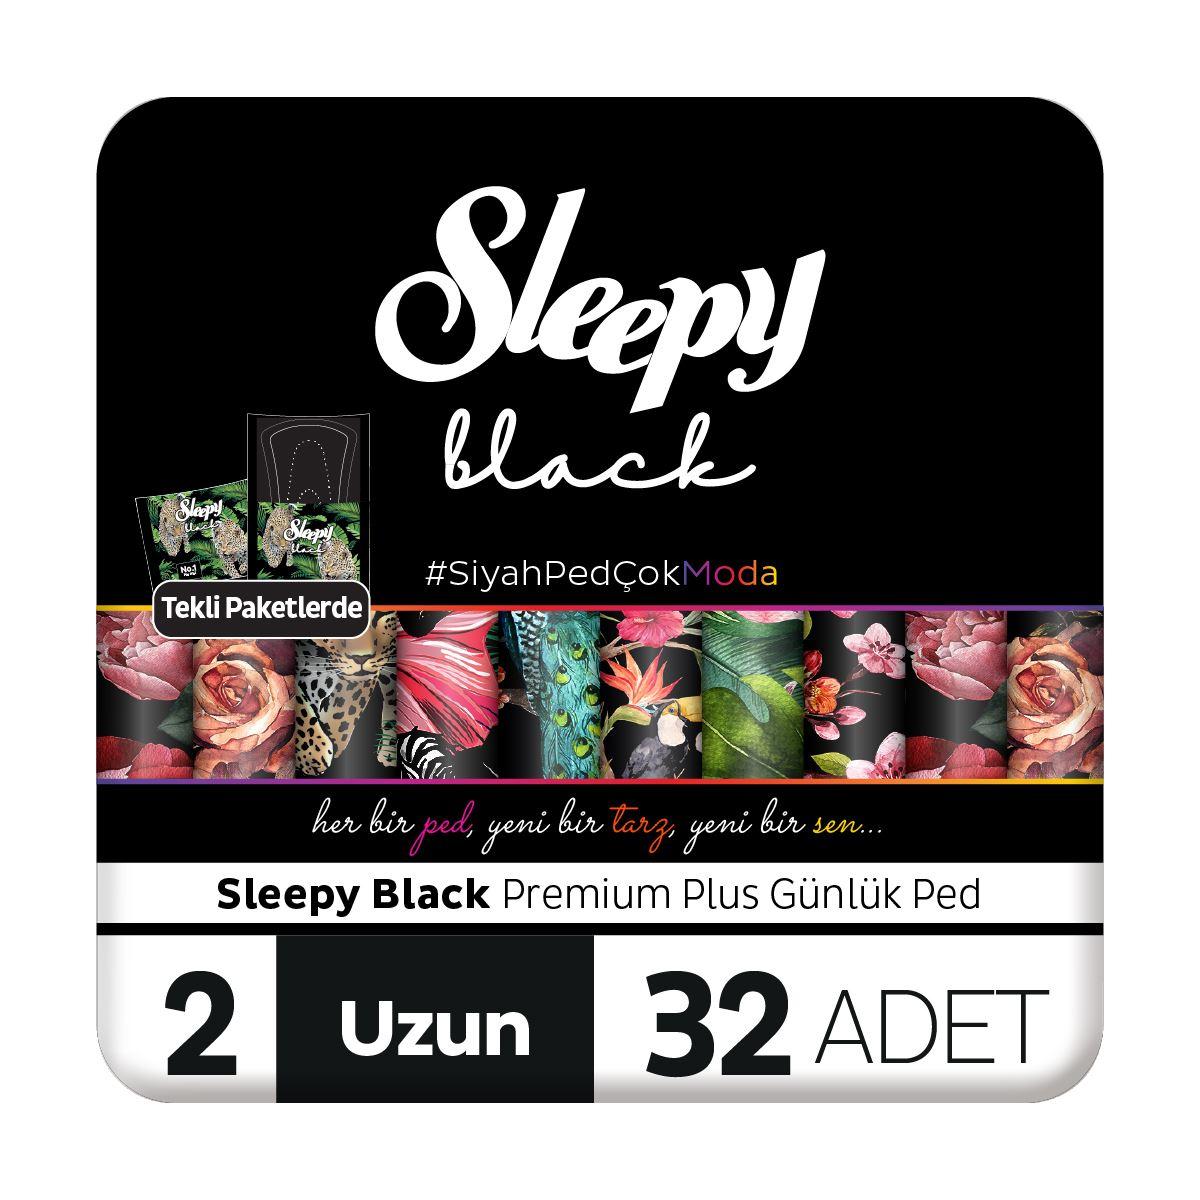 Sleepy Black Premium Plus Günlük Ped Uzun 32x4 128 Adet Ped